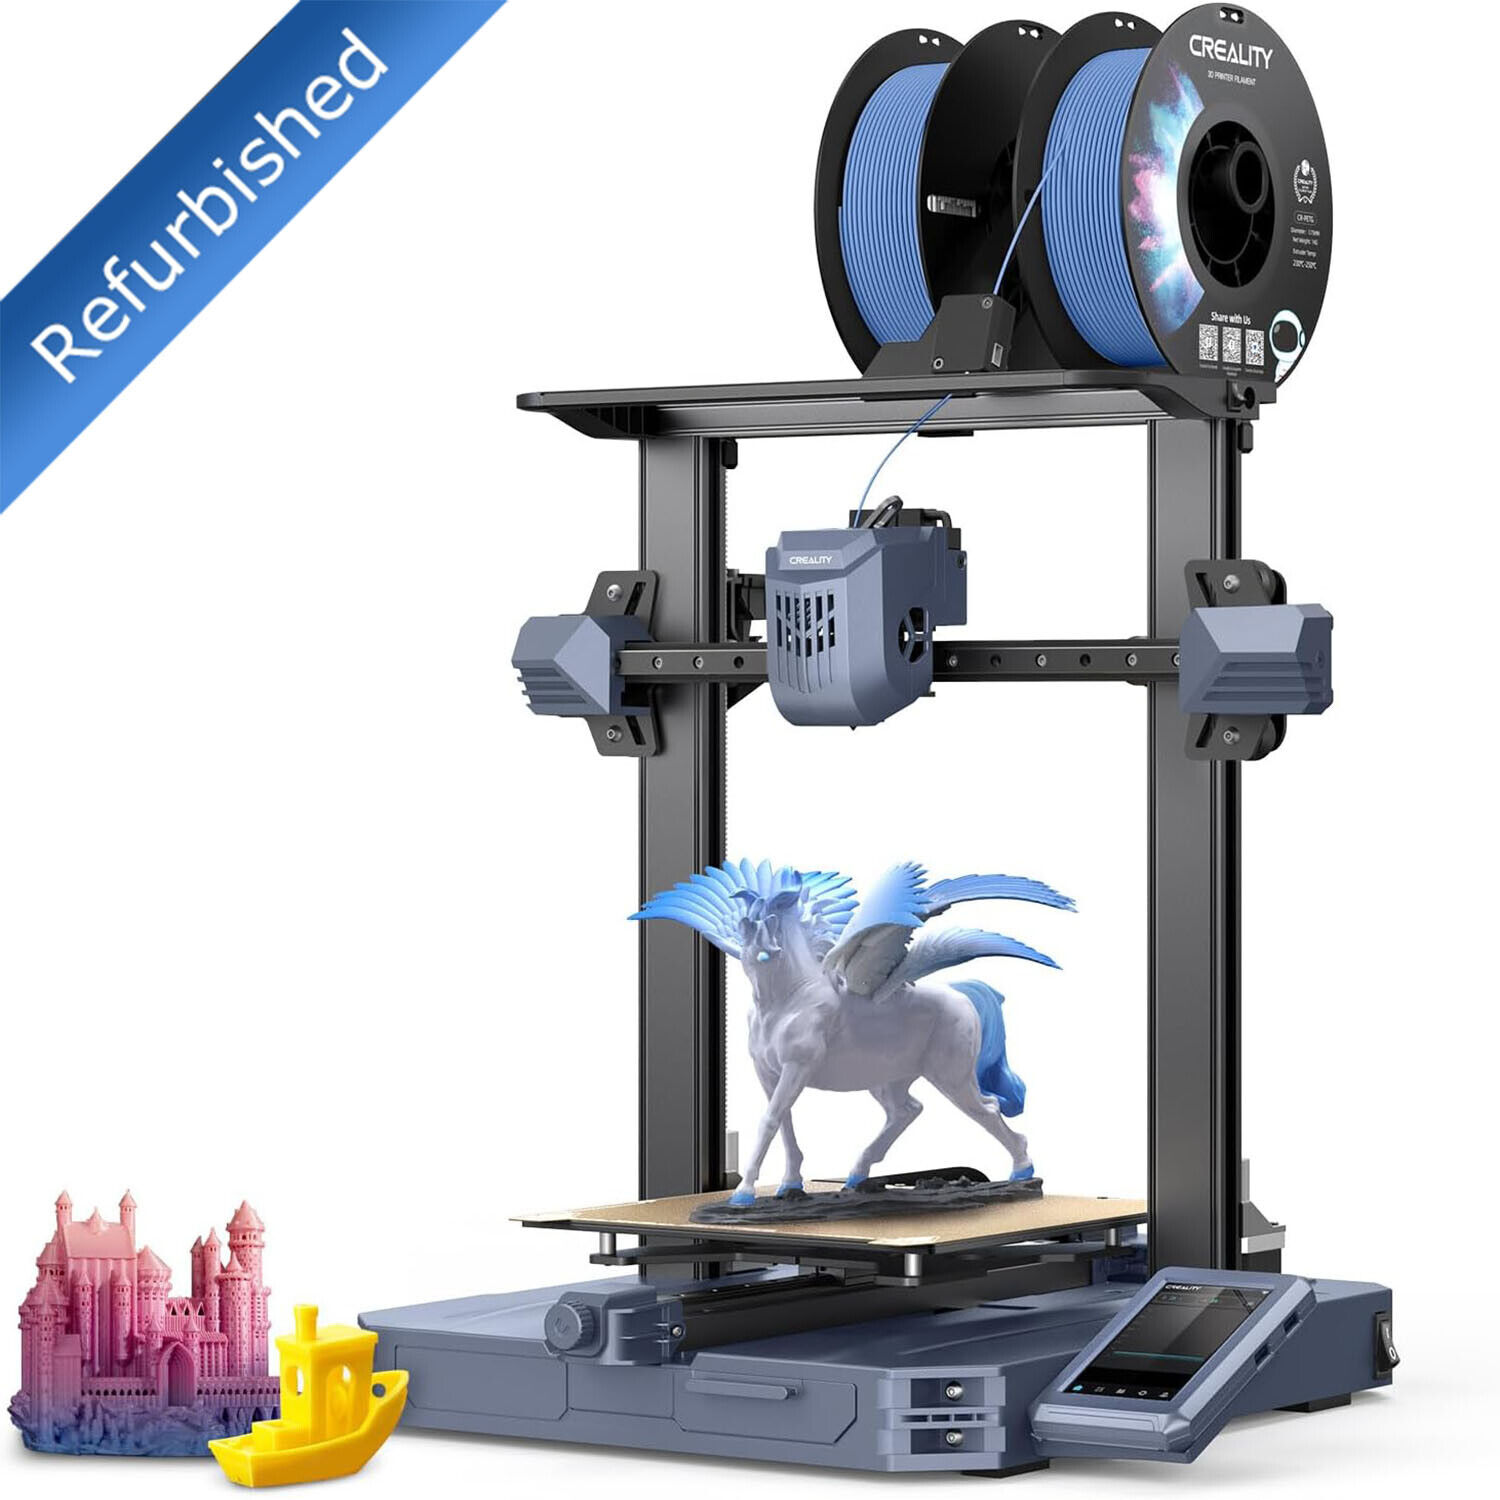 【Refurbished】Creality 3D Printer CR-10 SE 600mm/s Printing Speed Auto Leveling